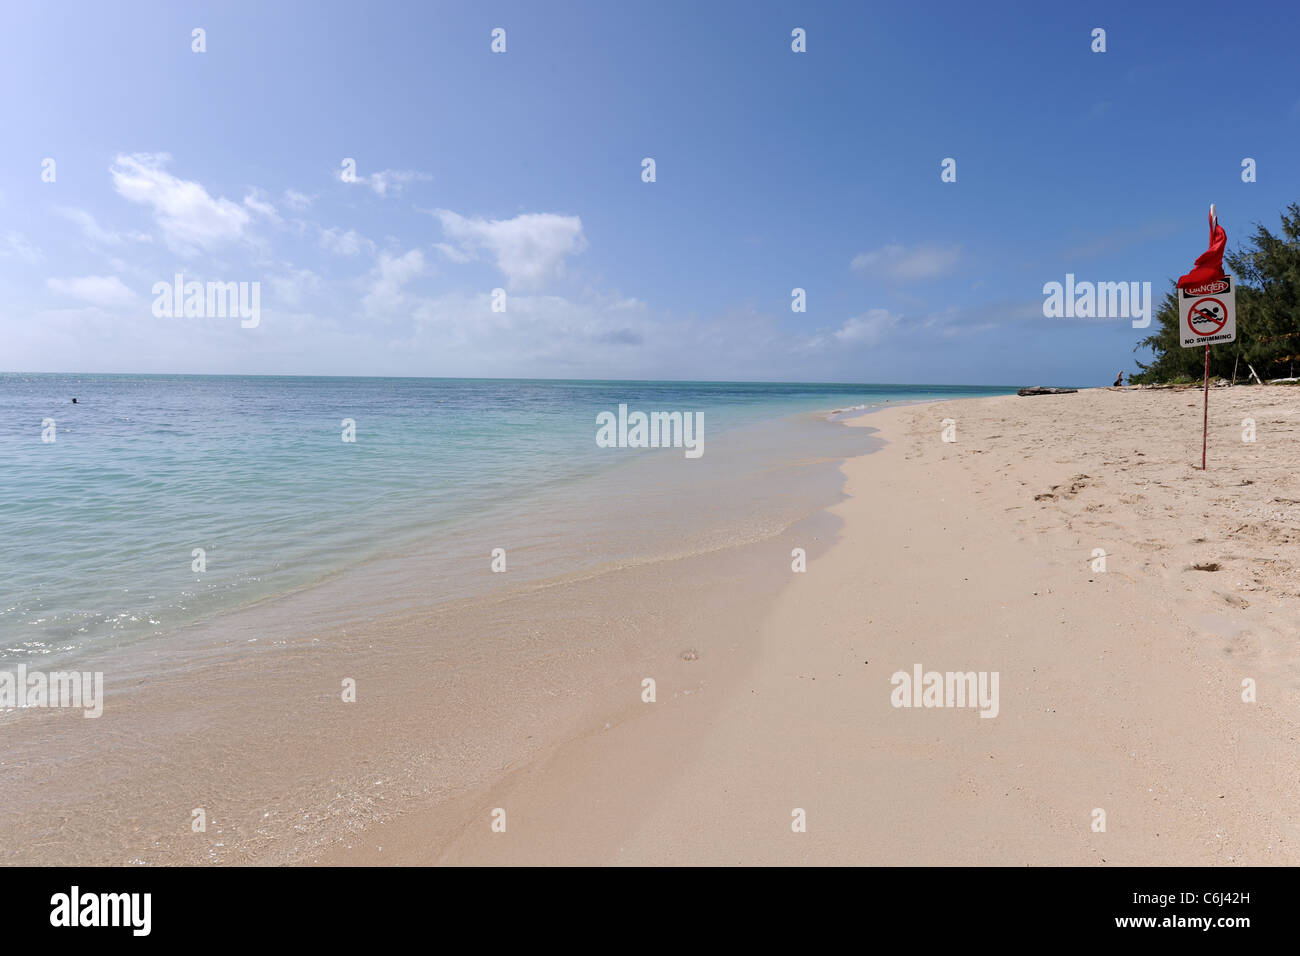 beach scene with Danger, No swimming sign, Green Island, Great Barrier Reef, Queensland, Australia Stock Photo